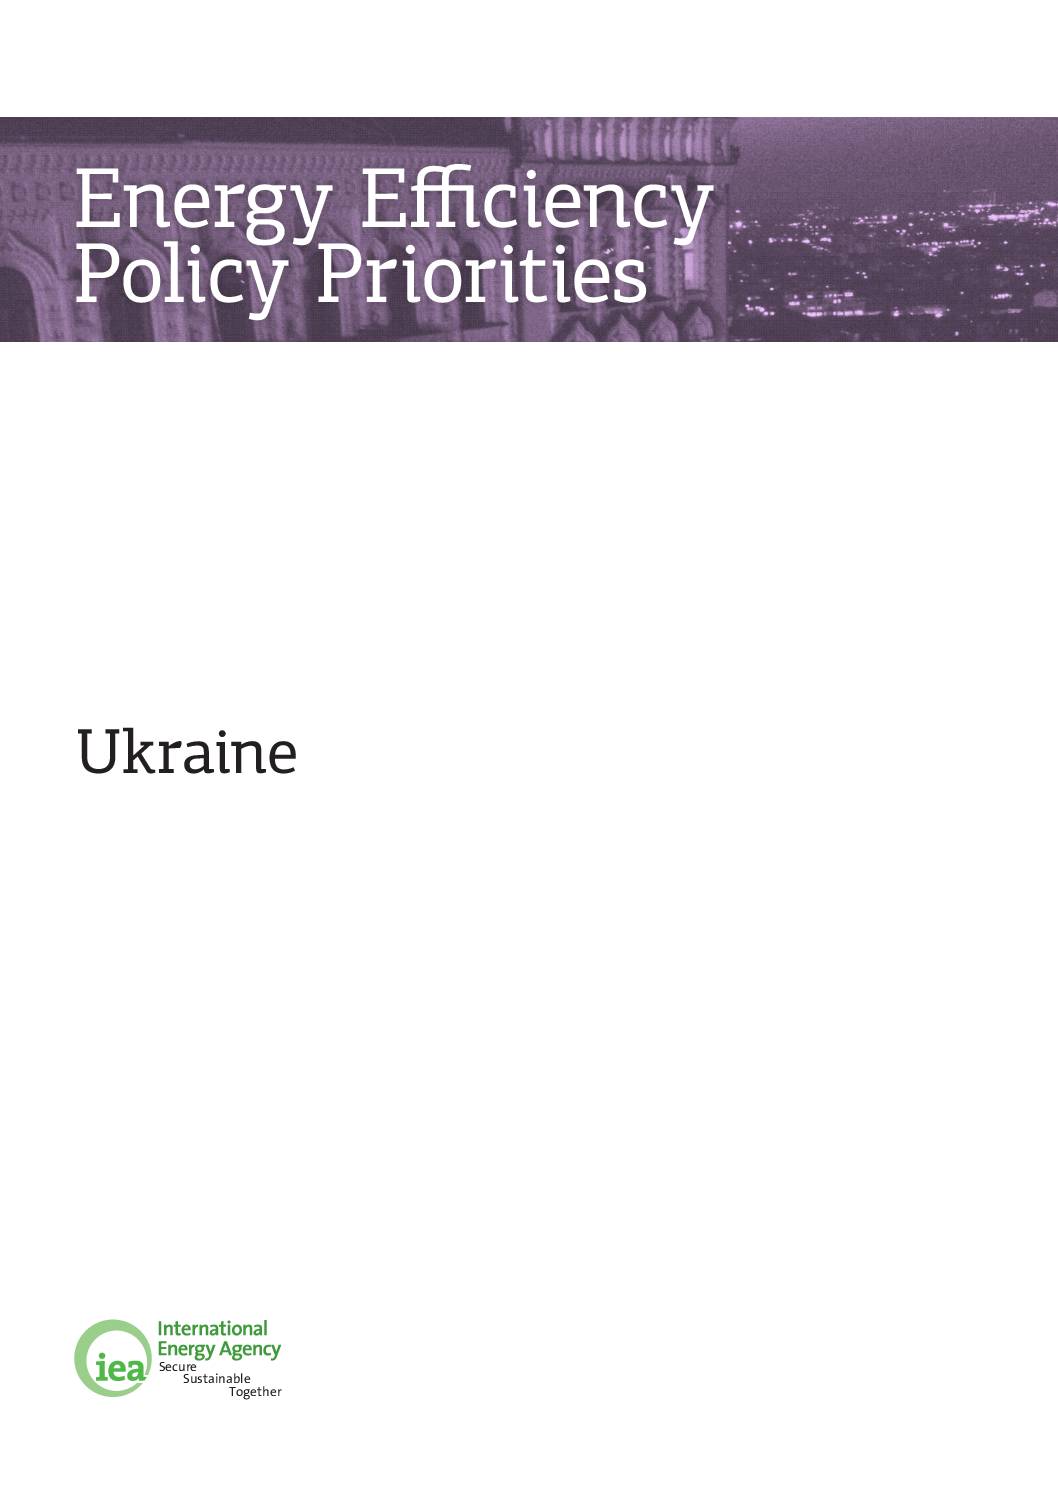 Energy Efficiency Policy Priorities – Ukraine